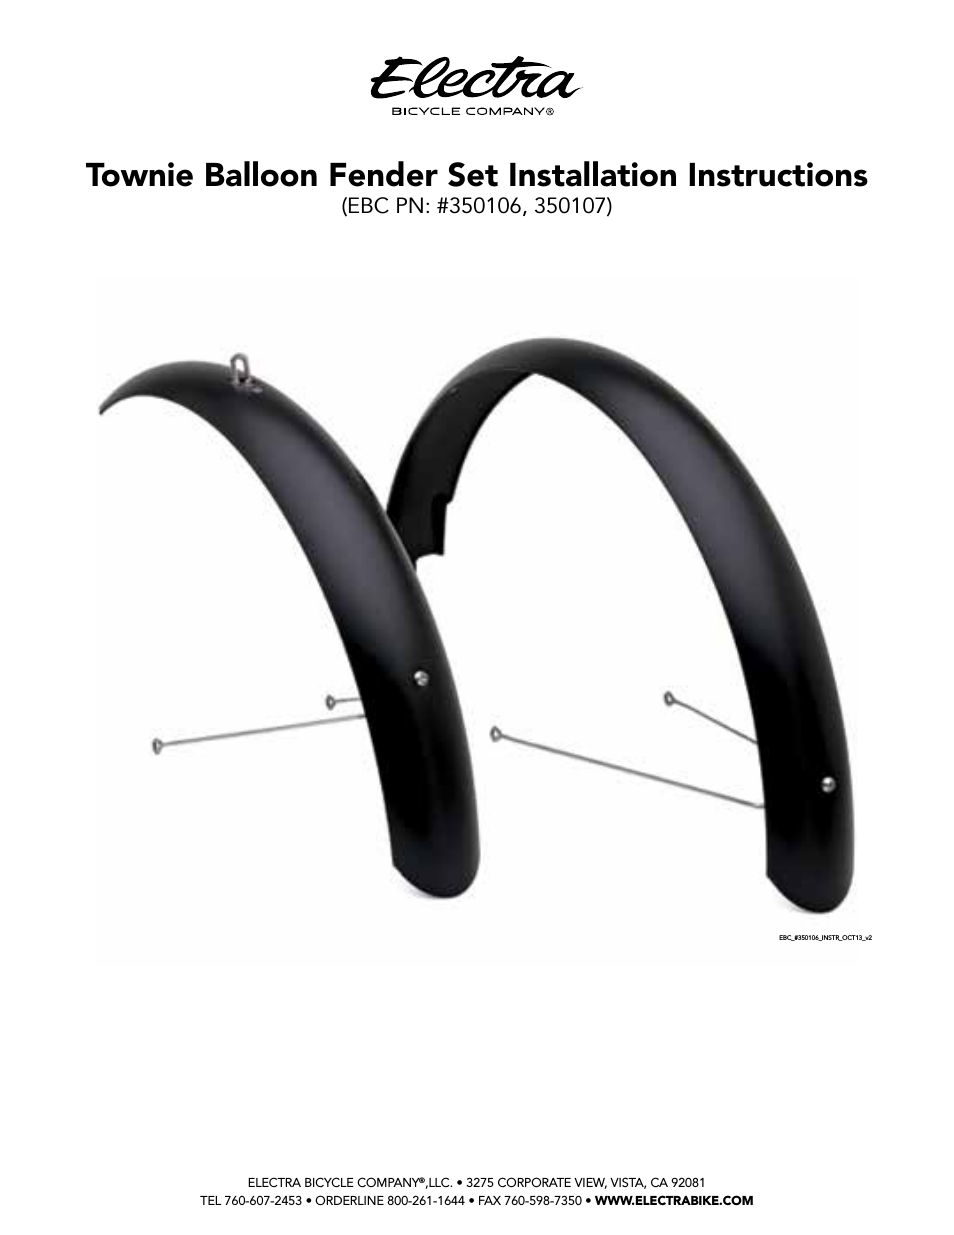 Townie Balloon Fender Set (350106, 350107)